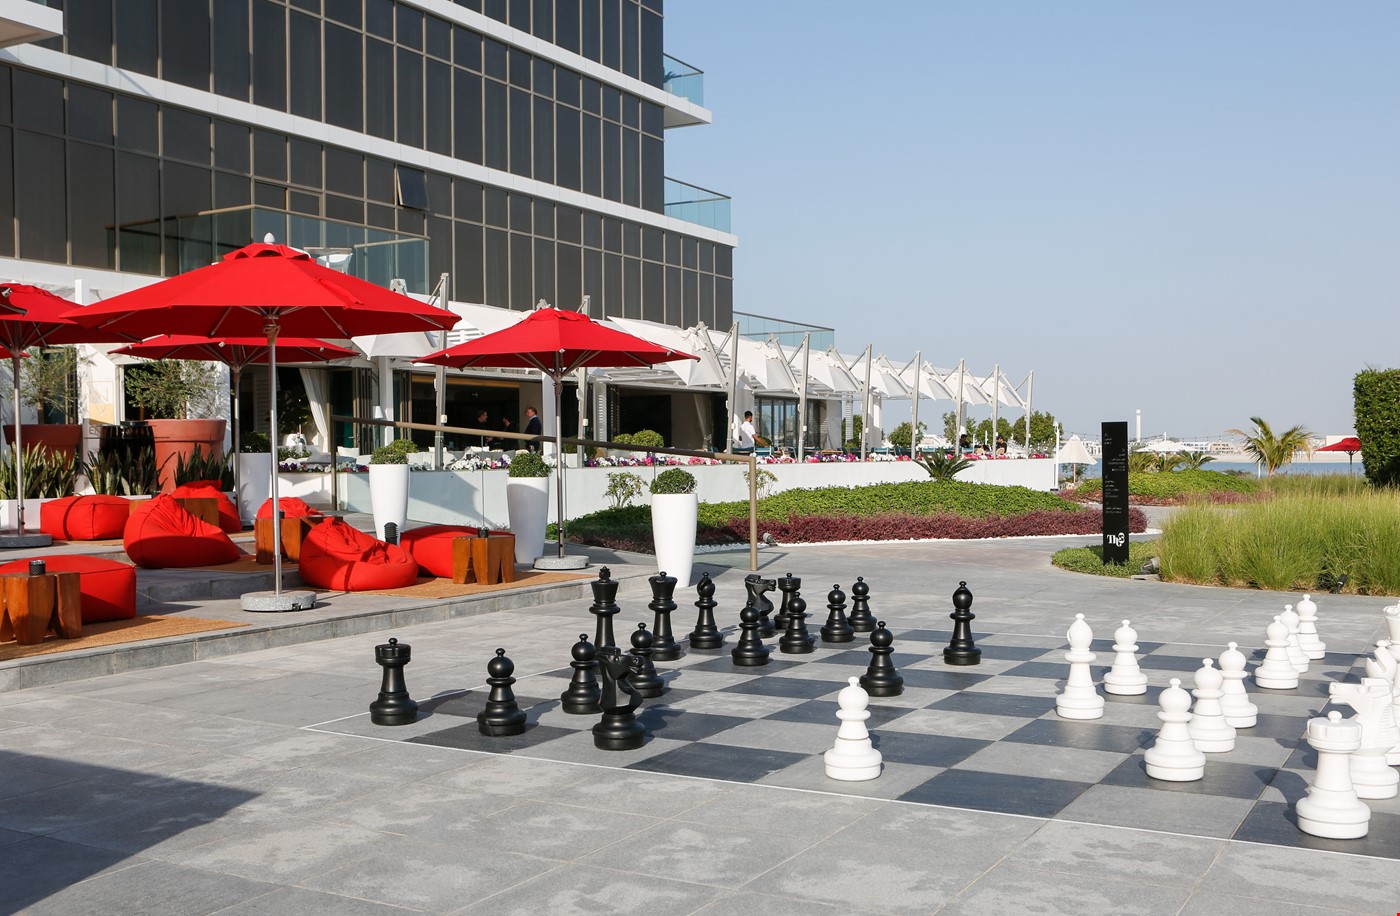 Hotel Dubai United Arab Emirates nomad remote 92027461-7ca0-4102-901b-1eebe0781f27_Chessfield.jpg